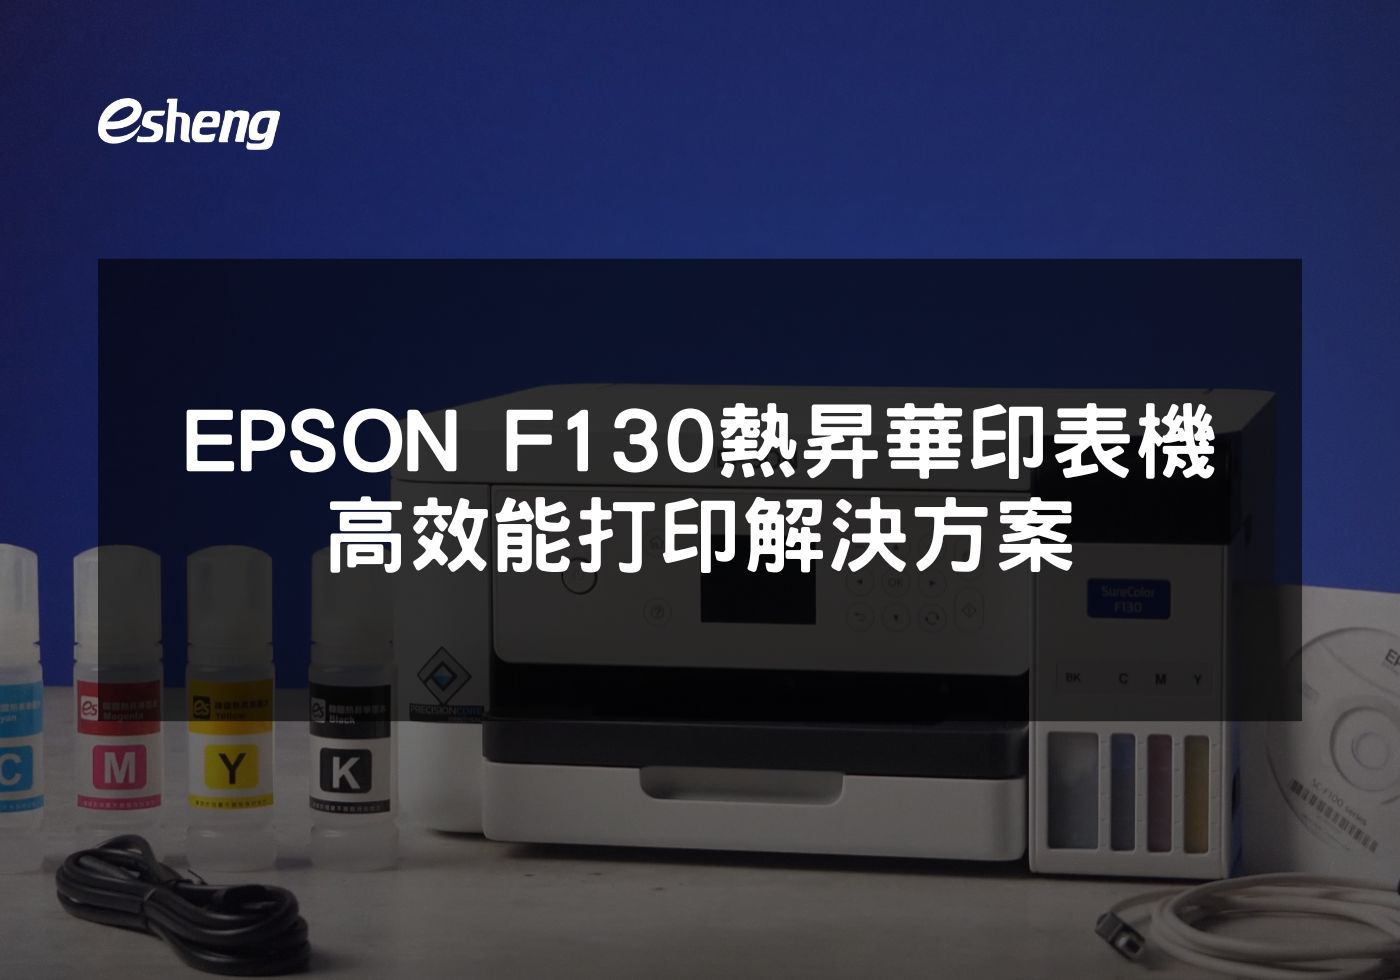 EPSON F130熱昇華印表機的高效打印解決方案